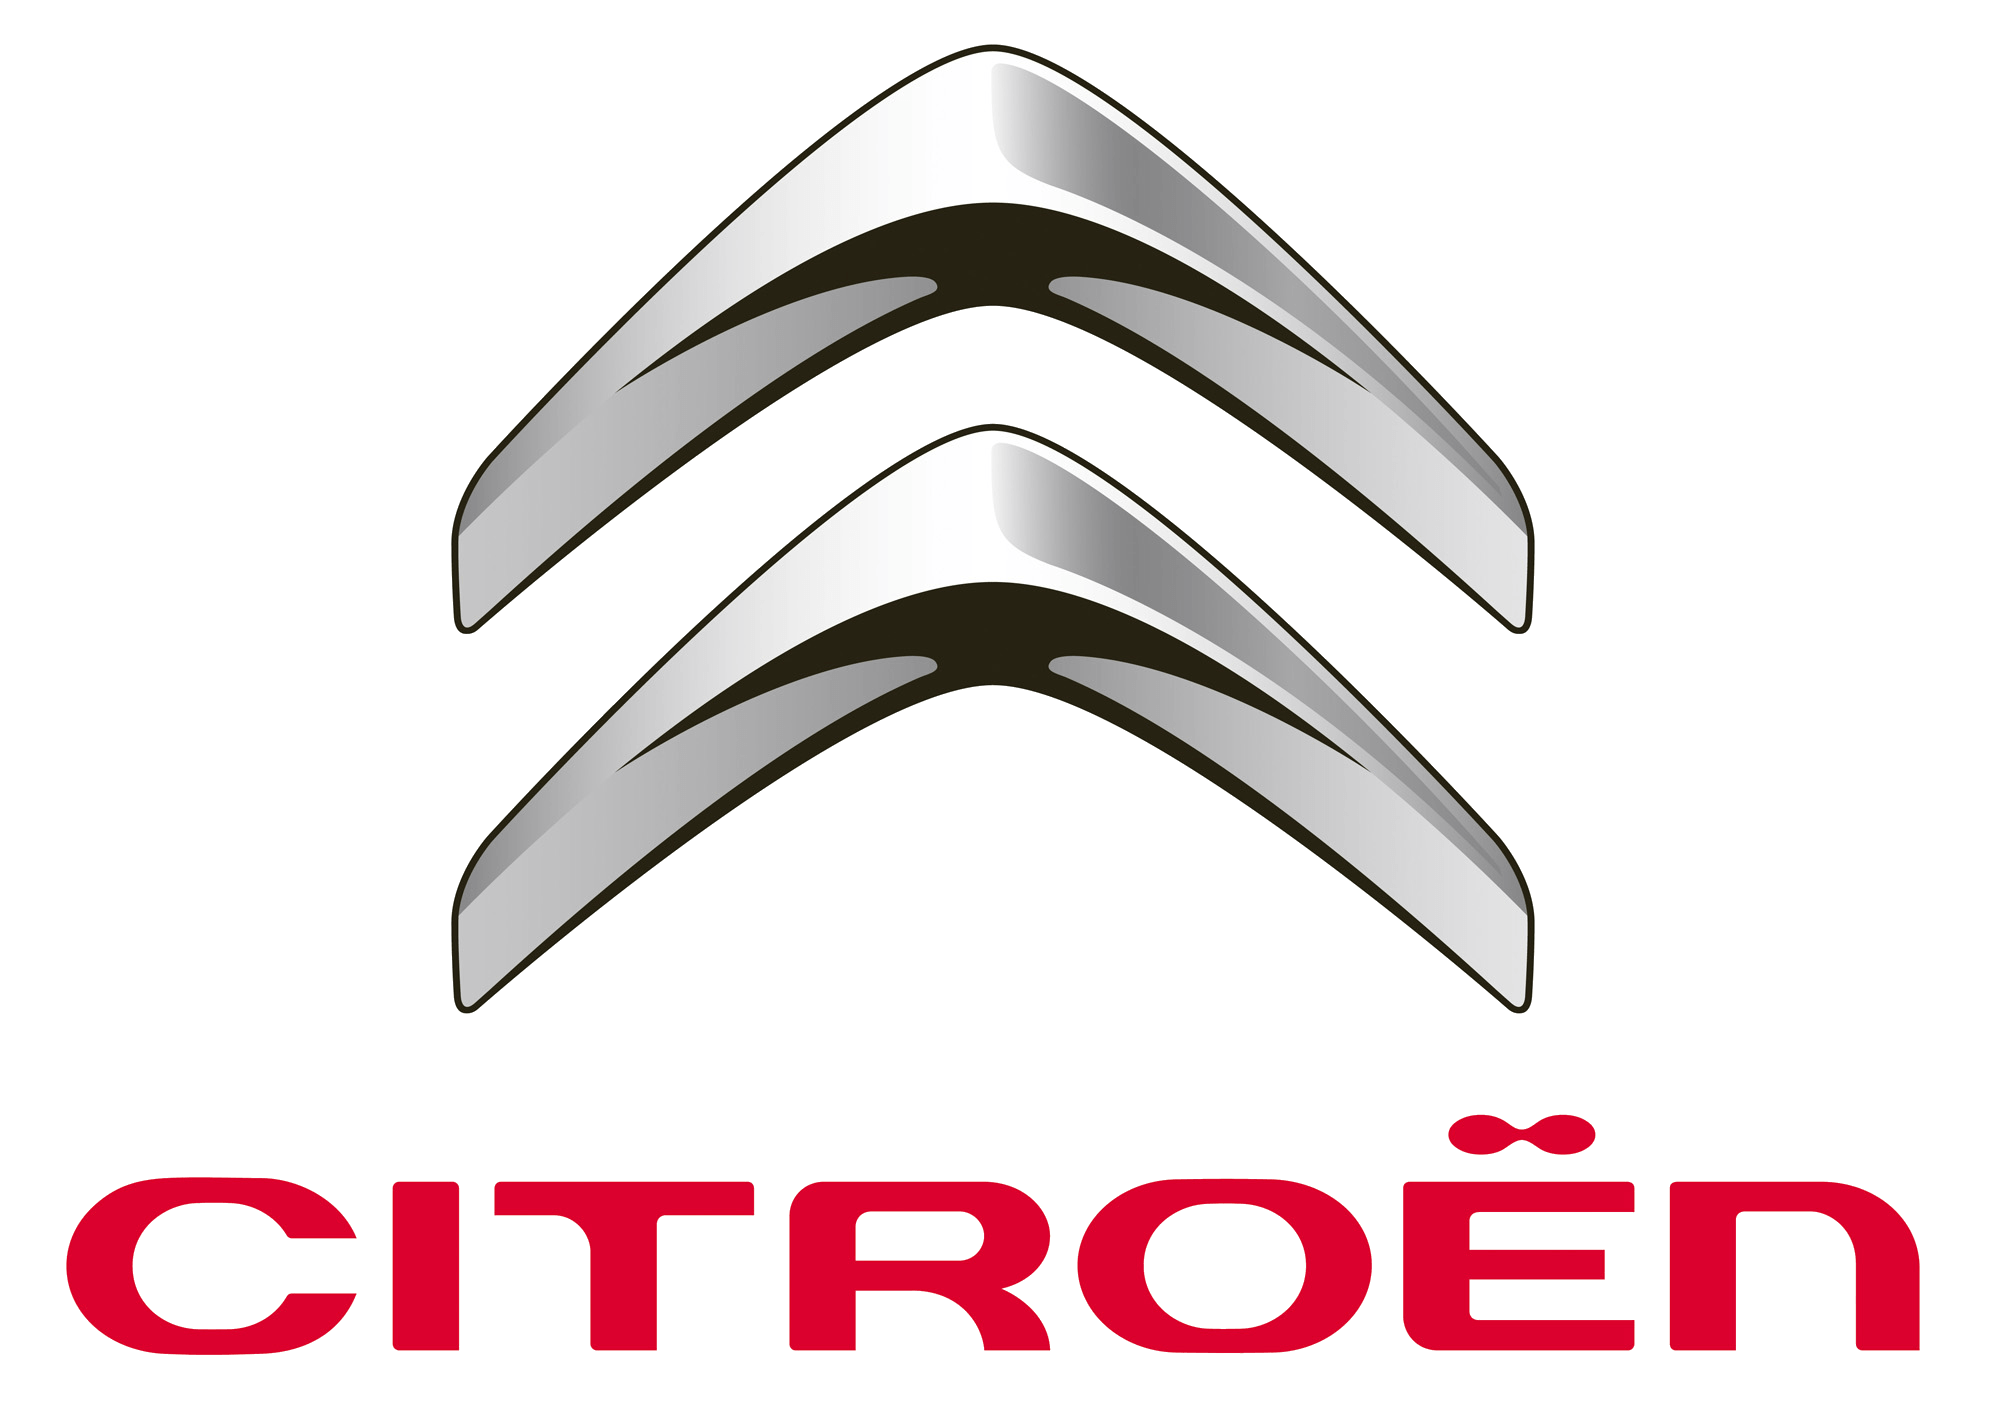 Silver Arrows Logo - Citroen Logo, Citroen Car Symbol Meaning and History | Car Brand ...